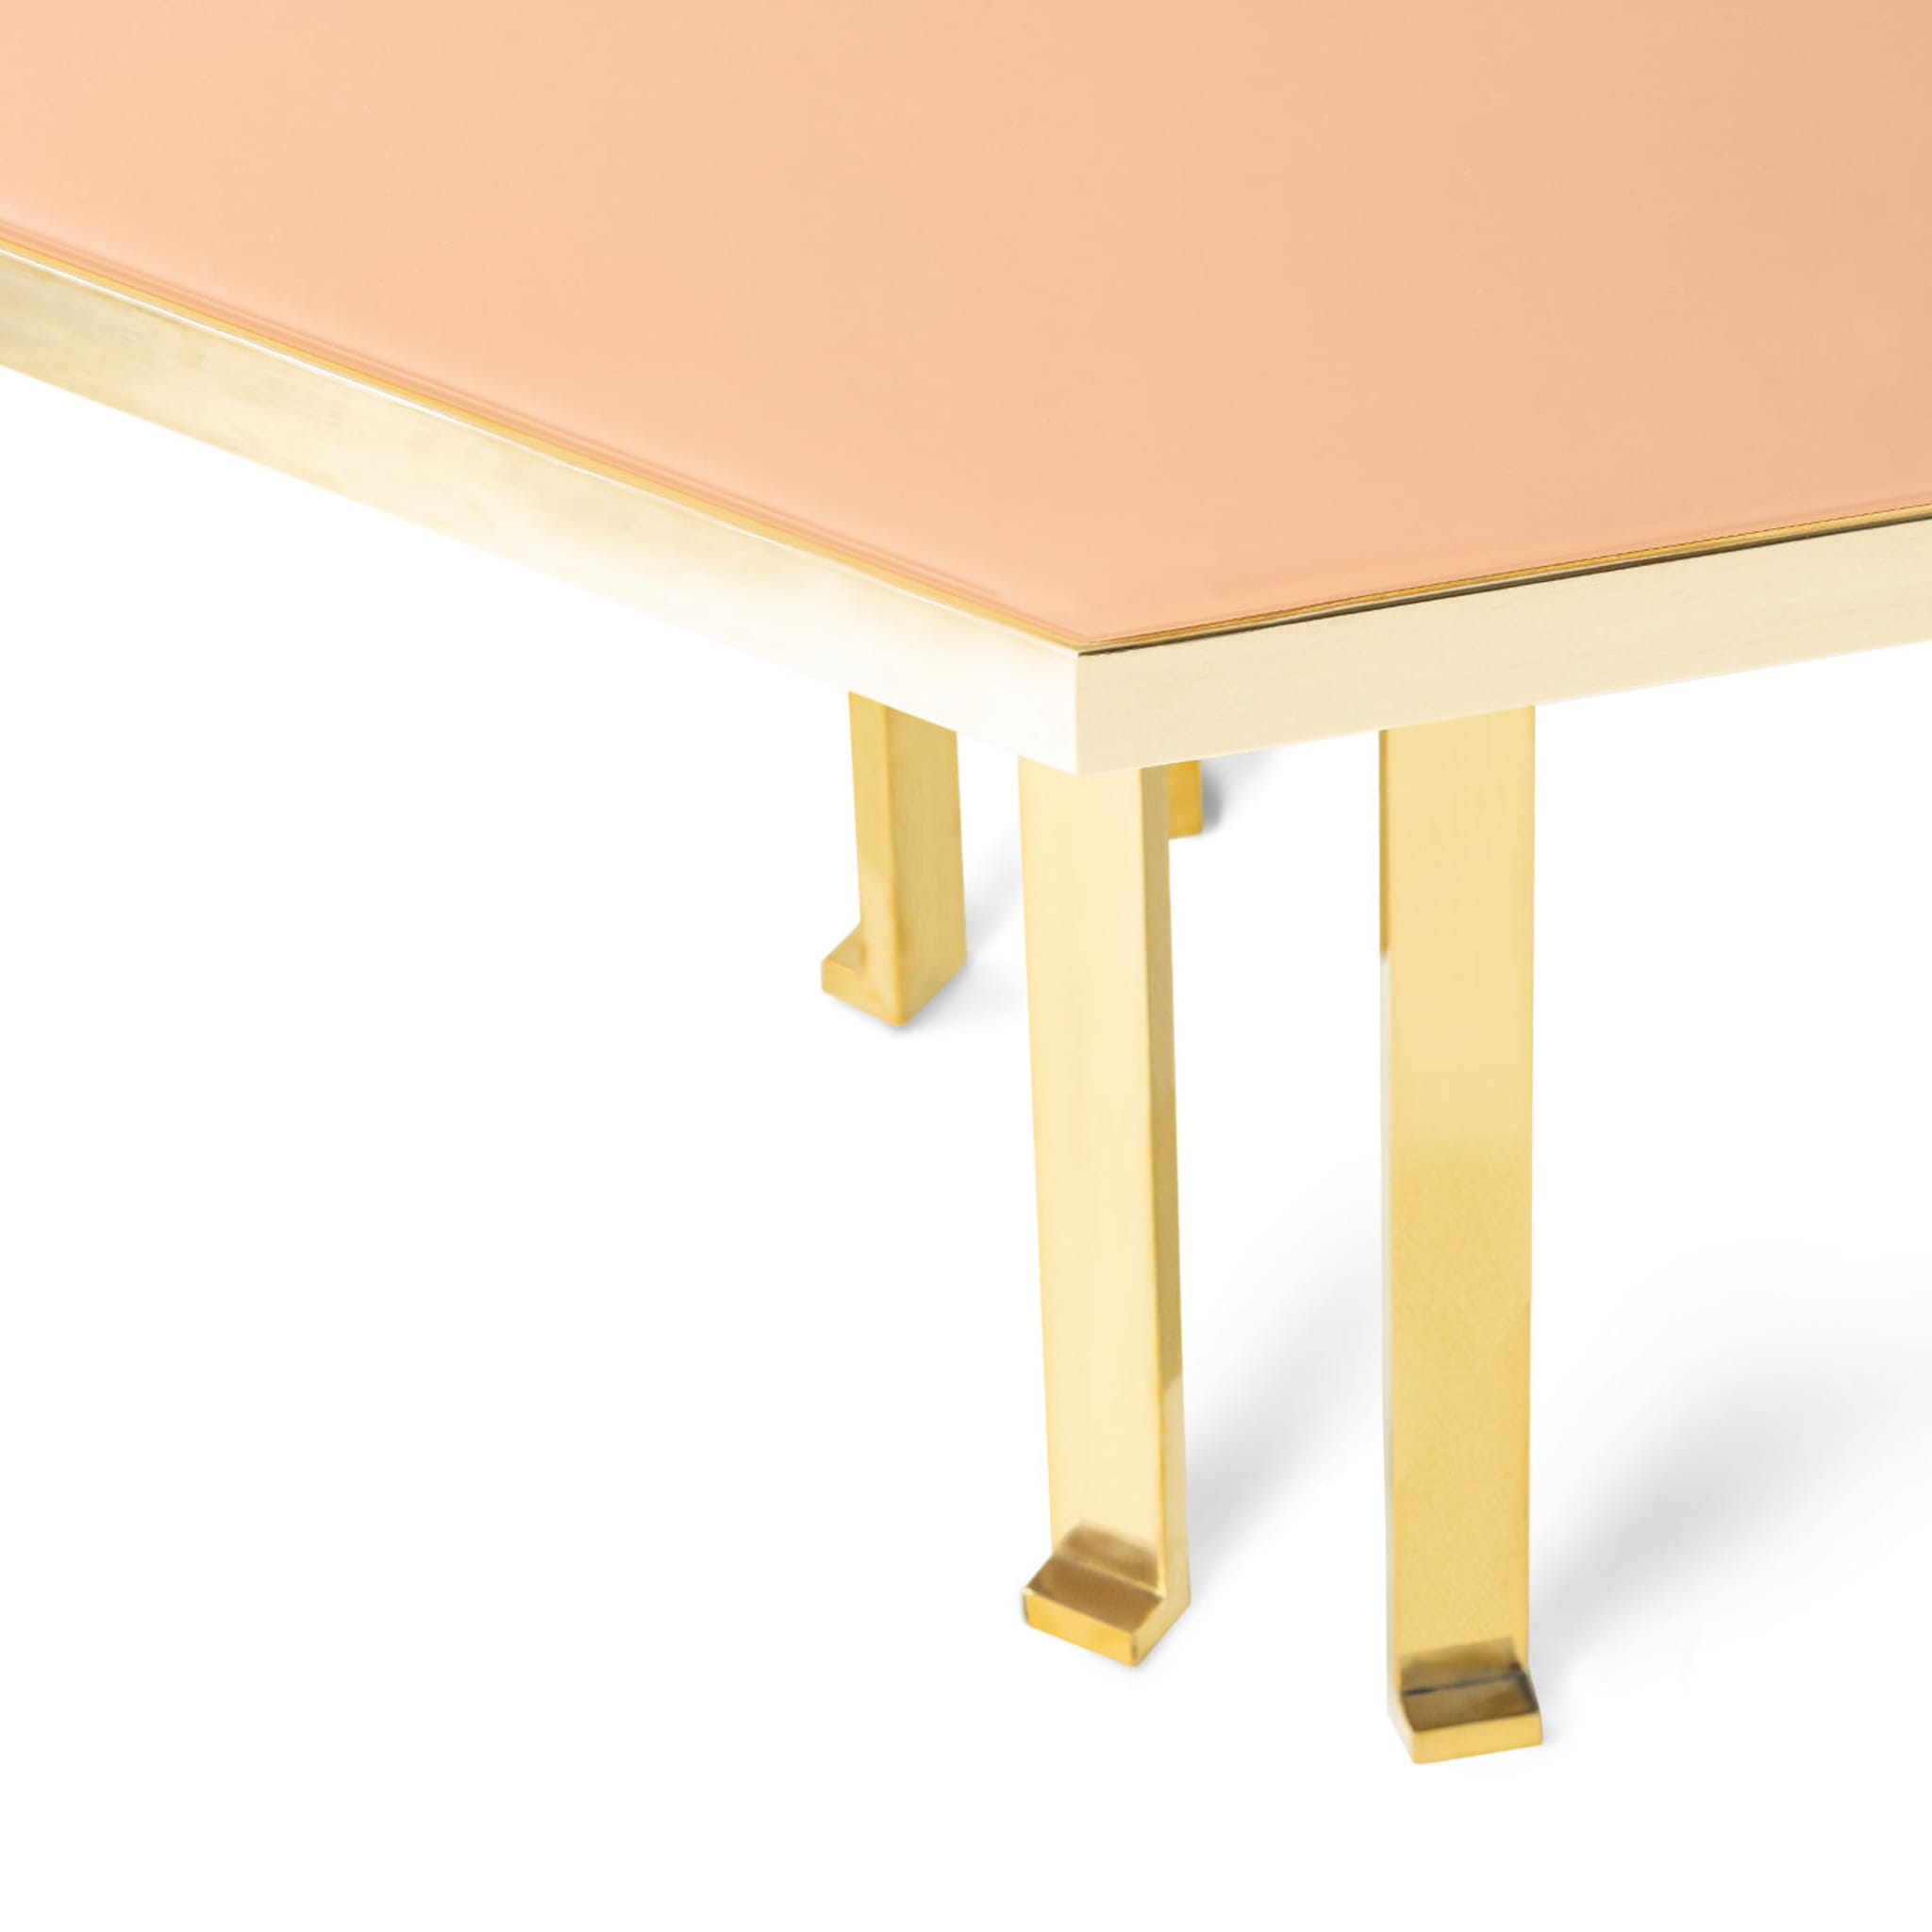 Holo Large Table by Filippo Feroldi - Alternative view 1